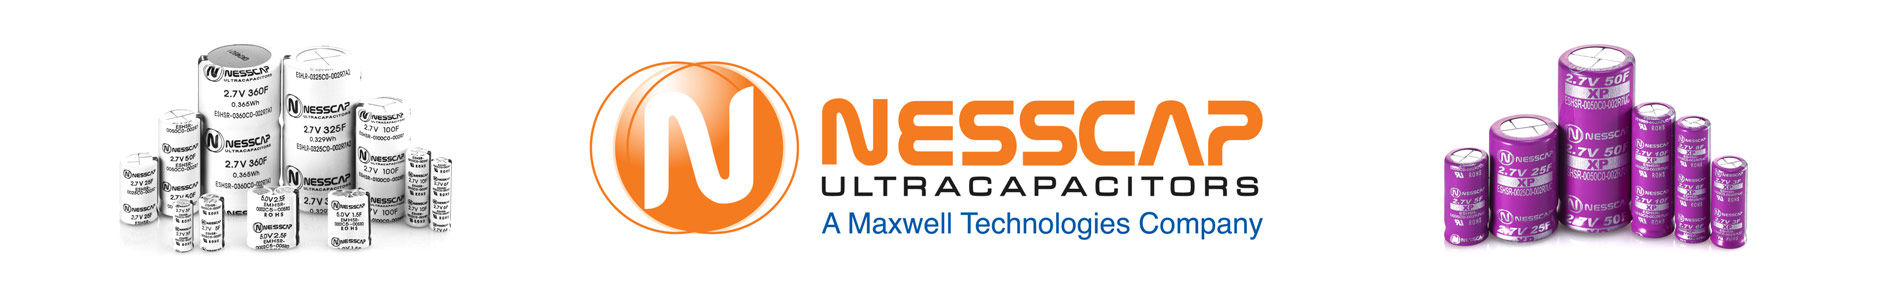 Nesscap - A Maxwell Technologies Company